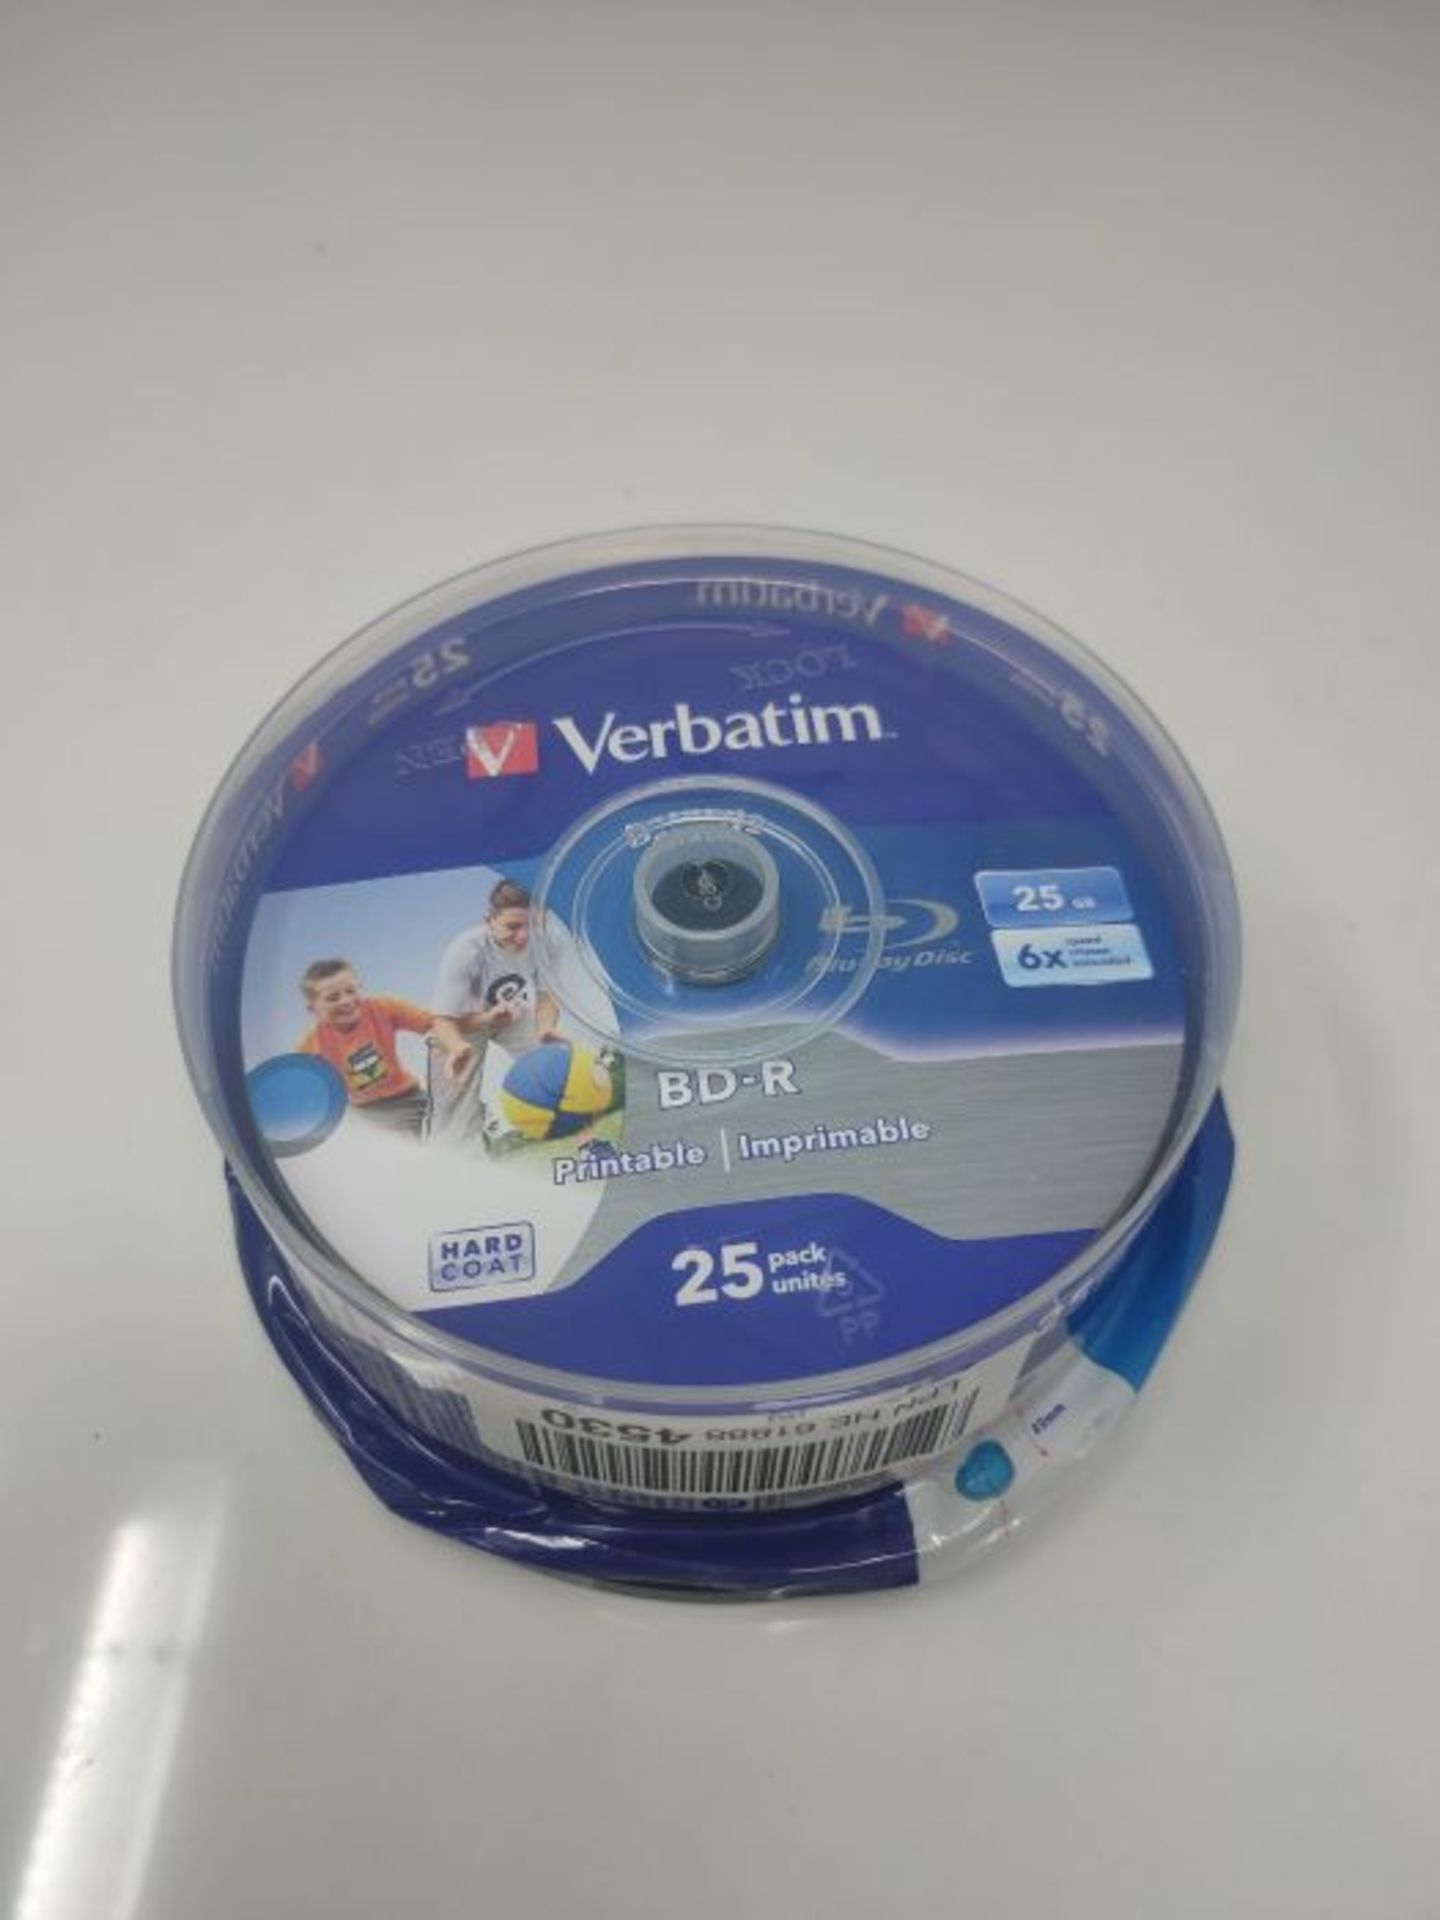 VERBATIM BD-R SL Datalife Blu-ray Rohlinge 25 GB I Blu-ray-Disc mit 6-facher Schreibge - Image 2 of 3